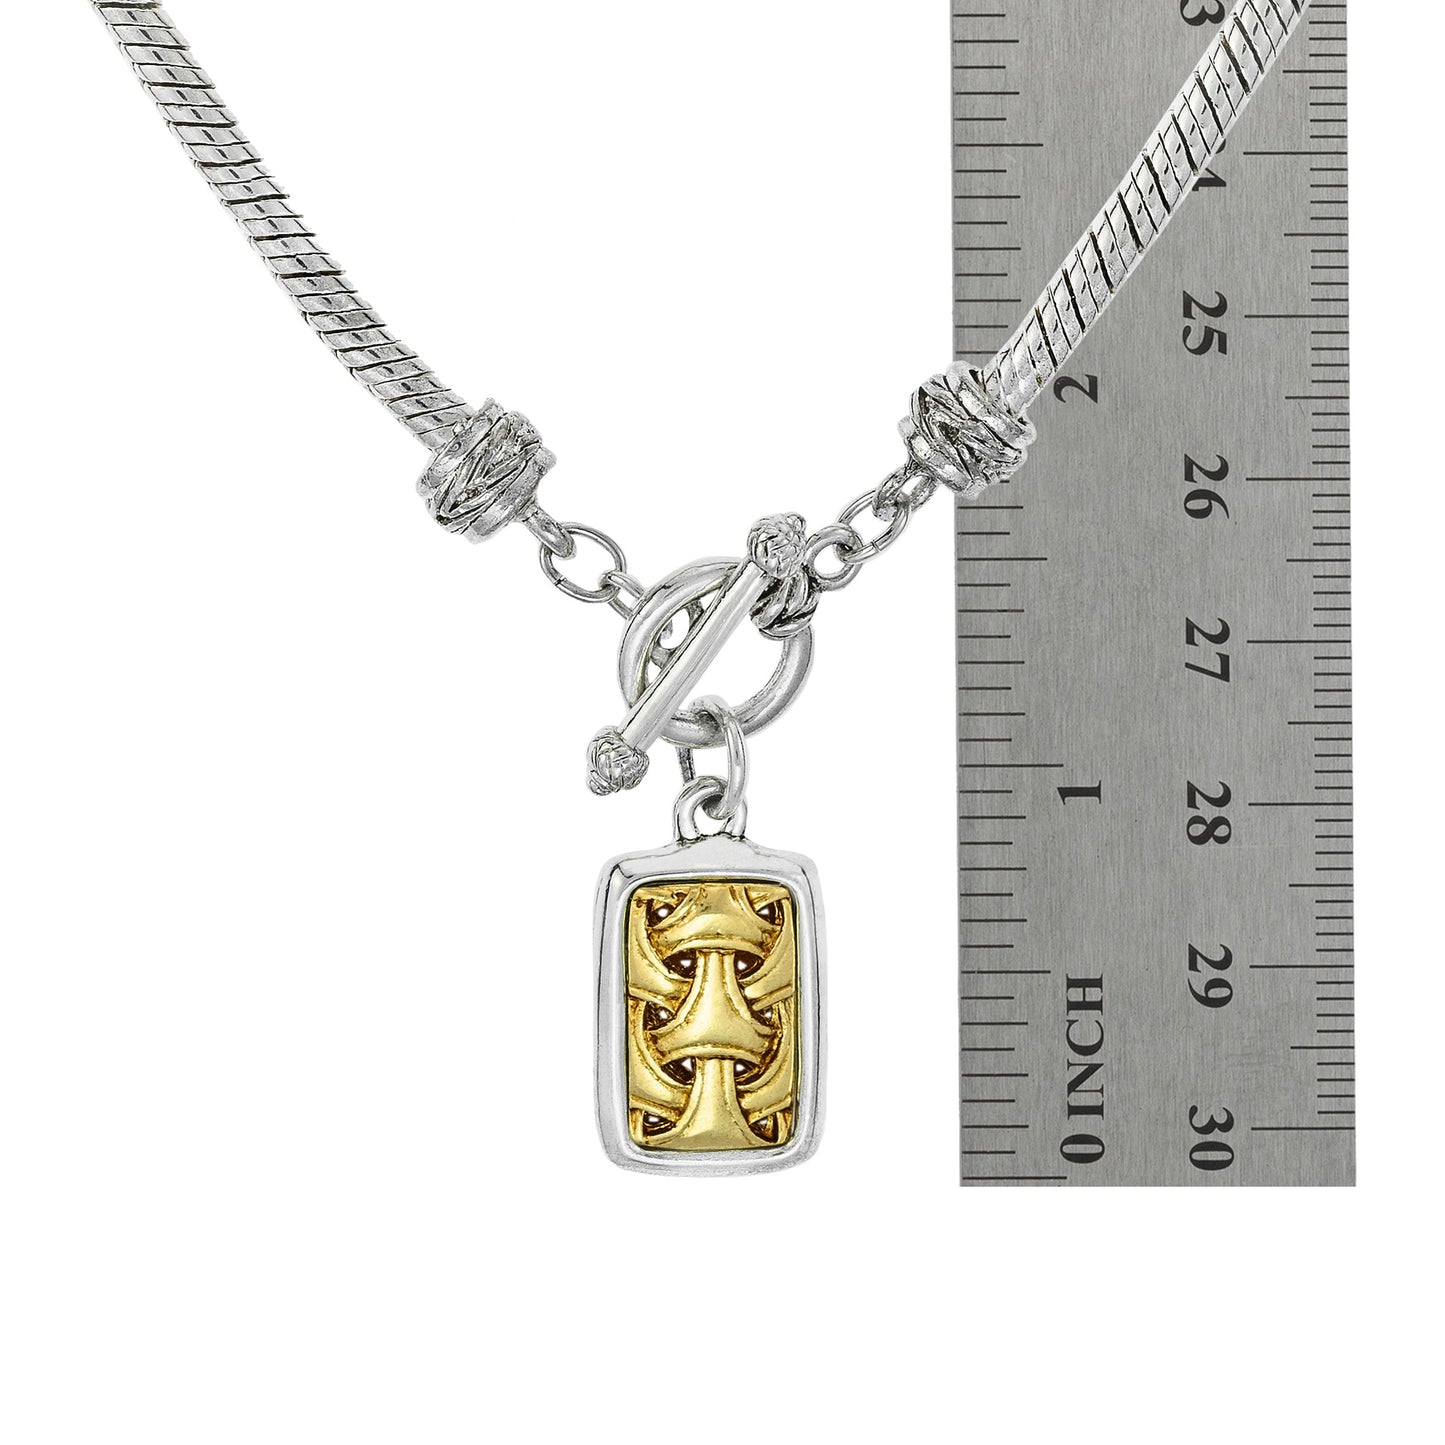 Vintage Oscar De La Renta 18 Inch and White Gold Silver Pendant Necklace 1 Inch Pendant OSN-612-WY Antique Womans Jewelry